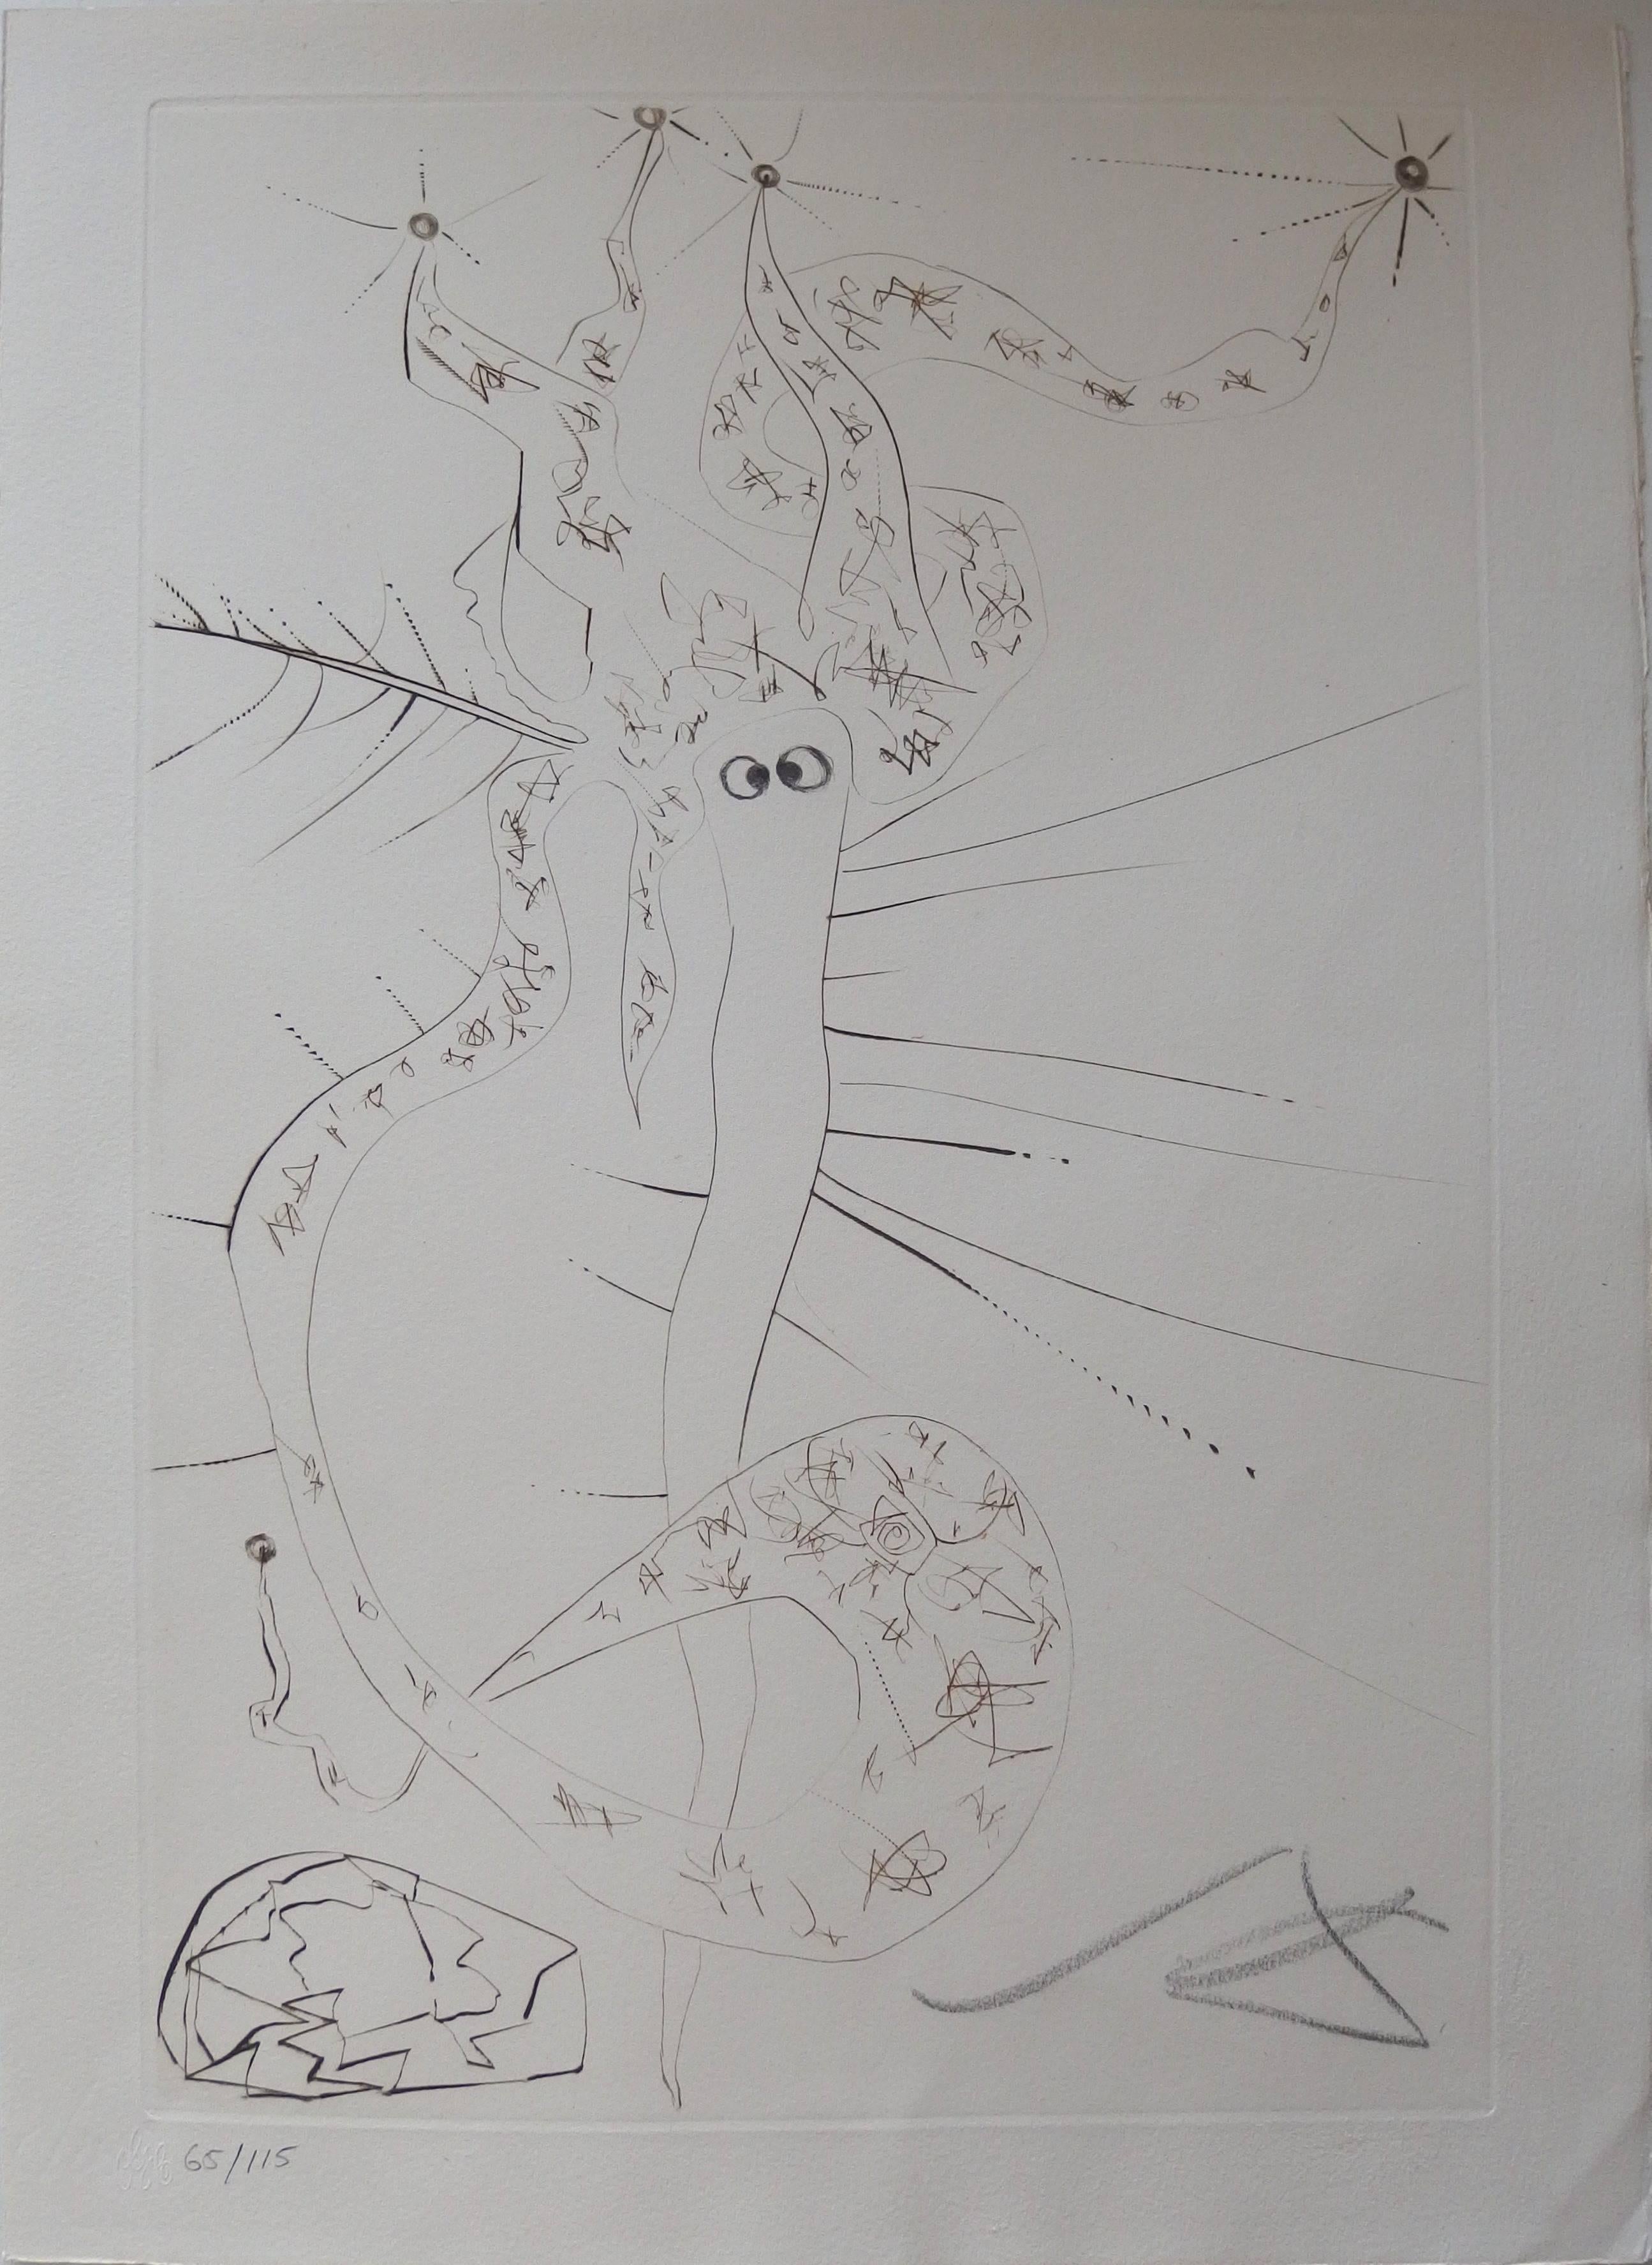 Salvador Dalí Abstract Print - Tristan le fou ("Mad Tristan"), Original etching, Handsigned